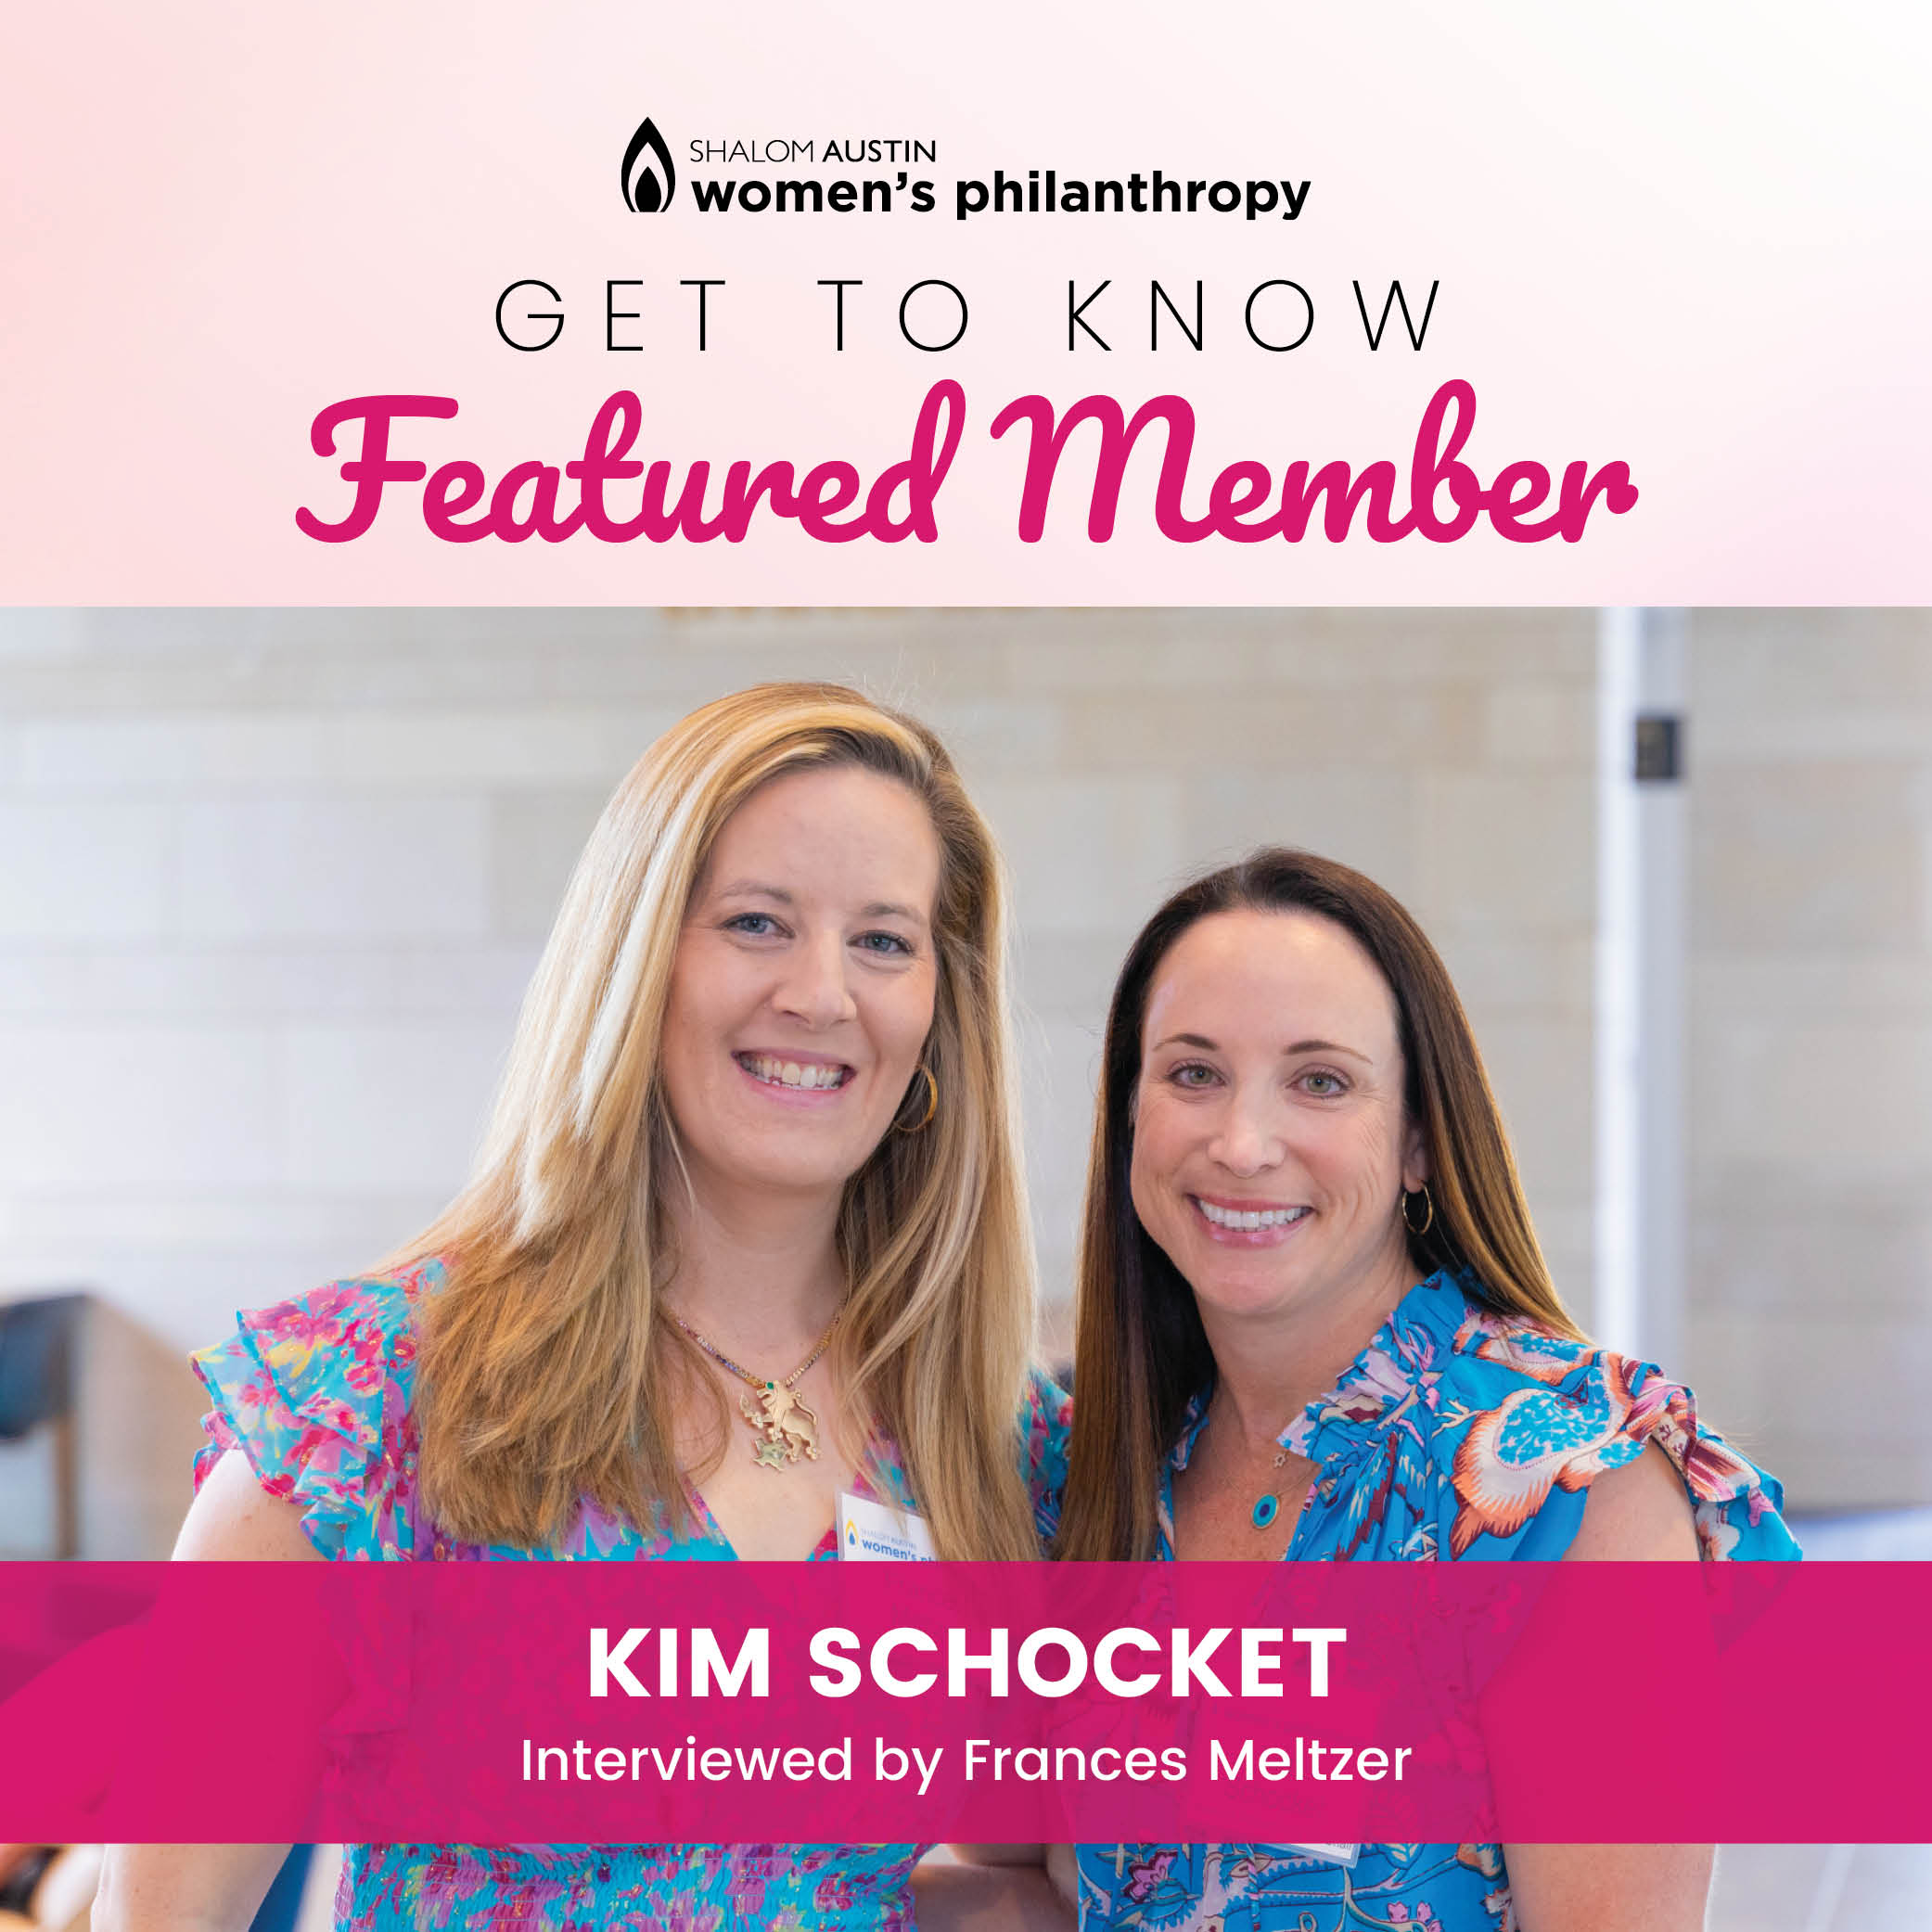 Shalom Austin Women's Philanthropy Featured Member - Kim Shocket, interviewed by Frances Meltzer.